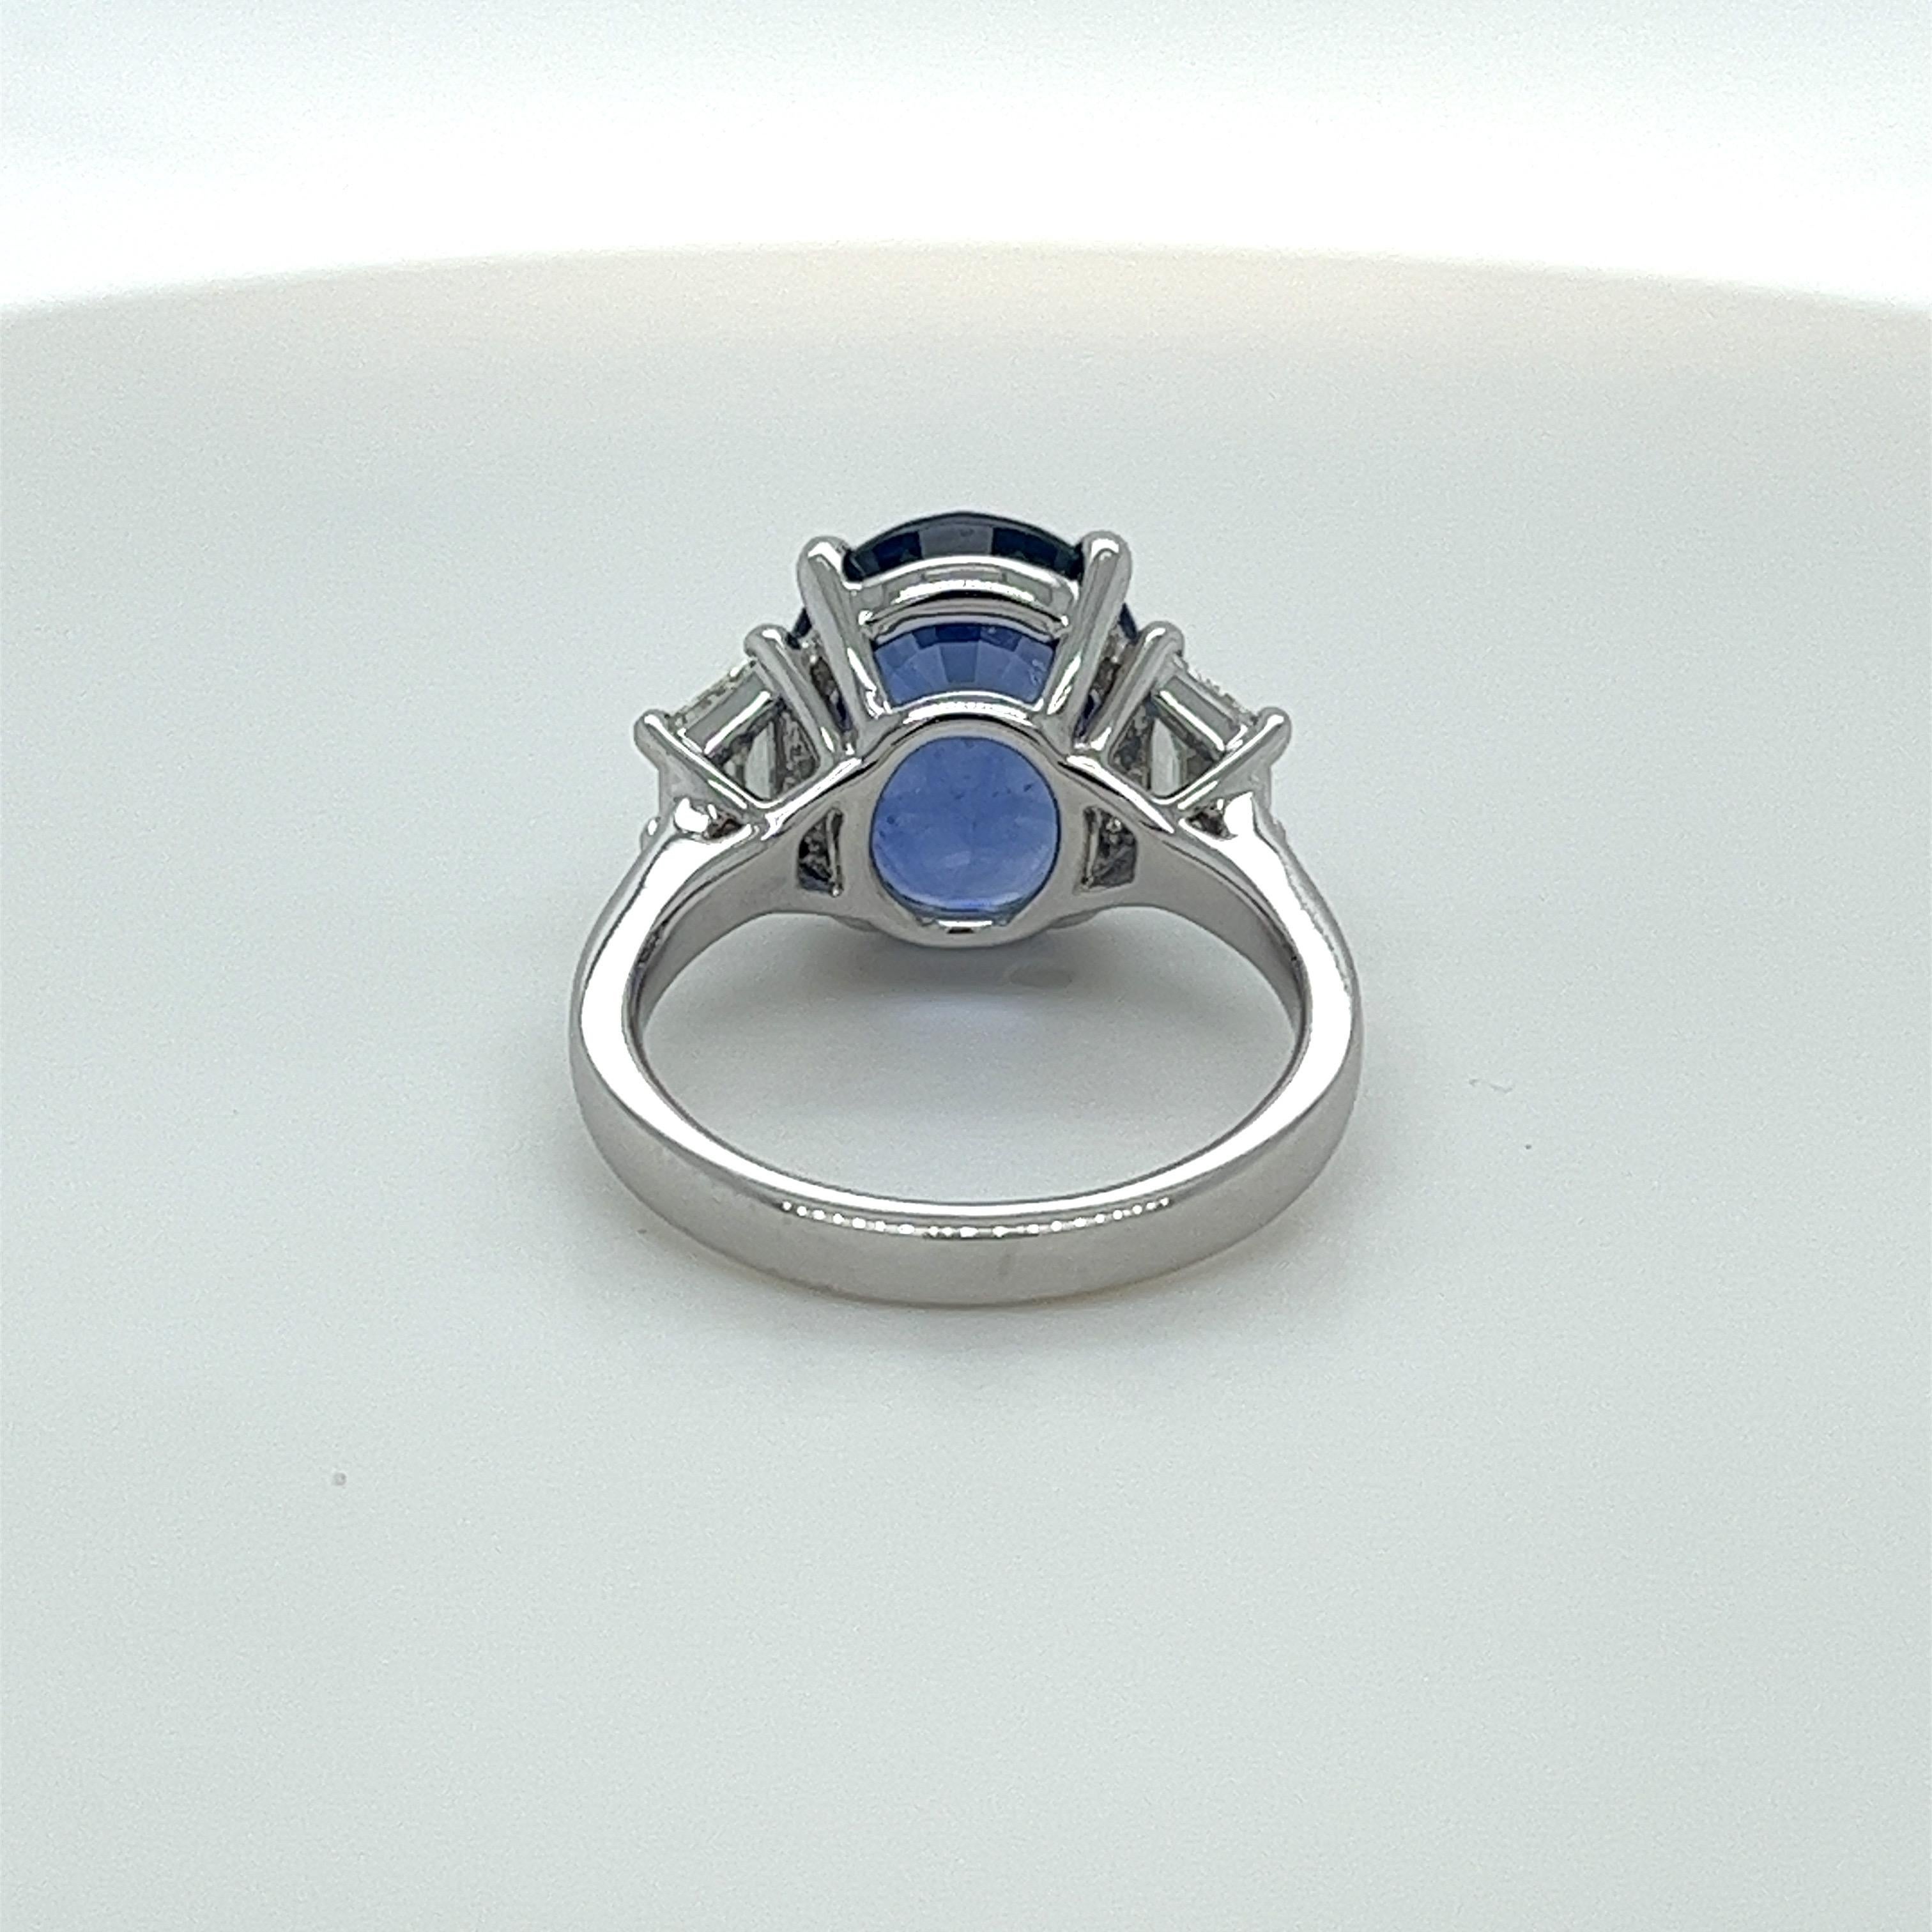 Oval Cut Certified 7.26 Carat Ceylon Sapphire & Diamond Ring in Platinum For Sale